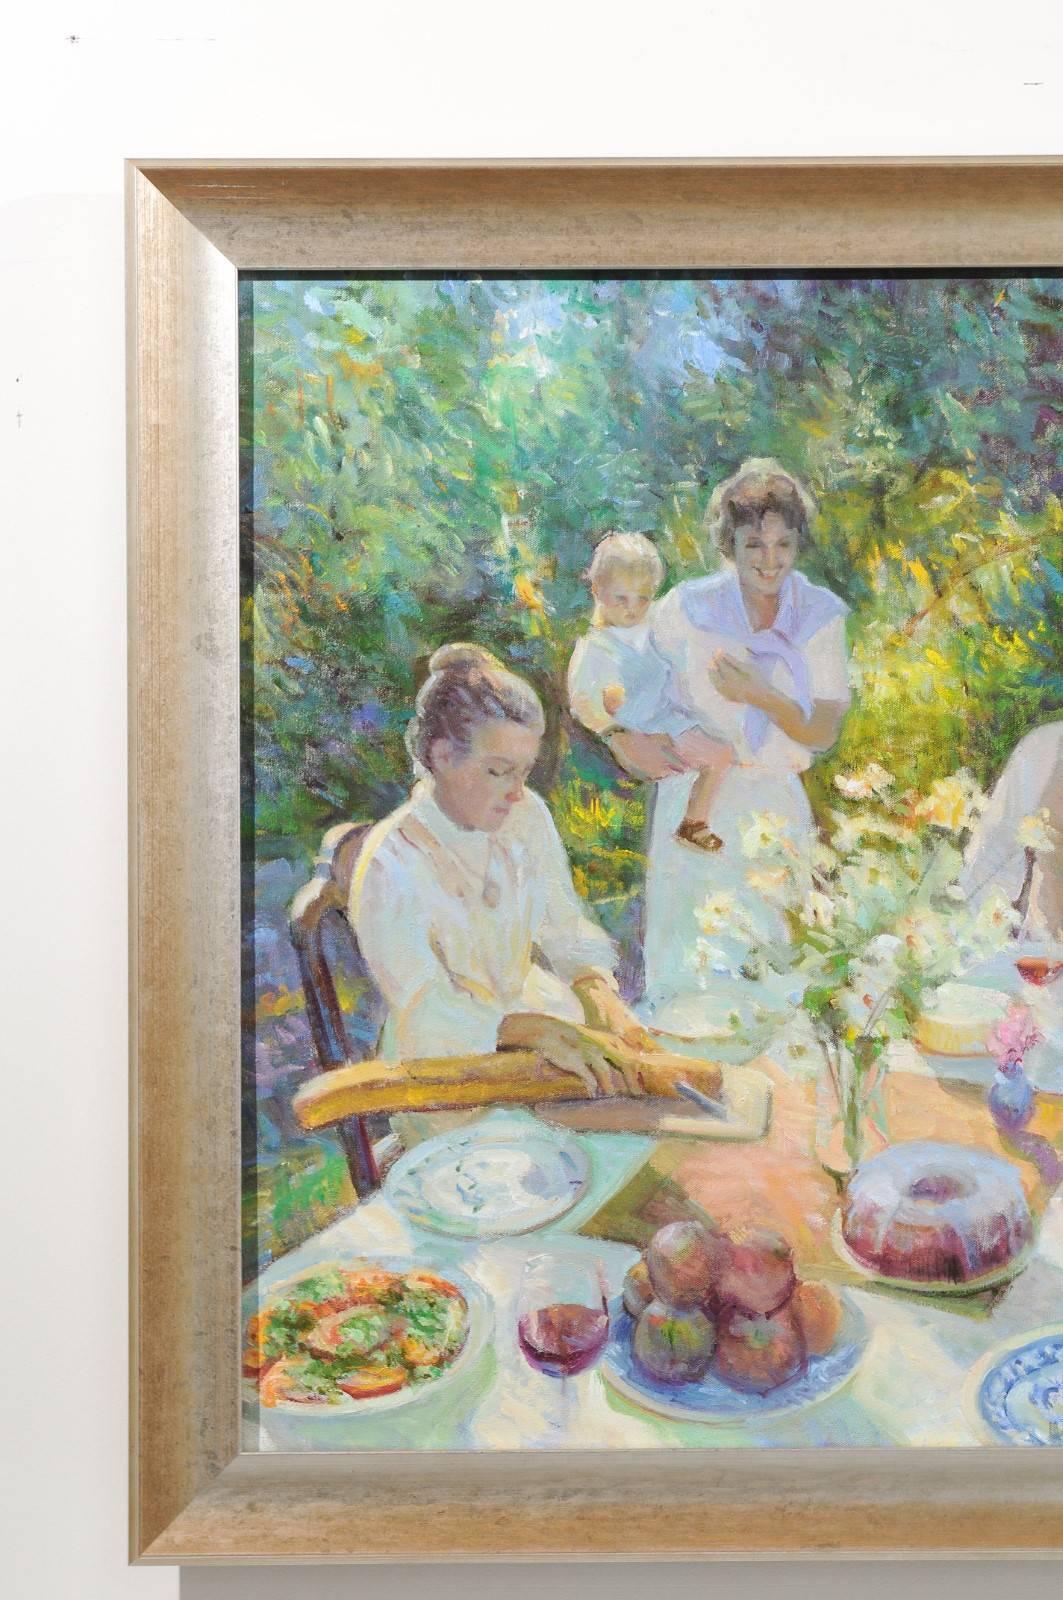 Family Joy, Don Hatfield Contemporary Framed Garden Oil on Linen Painting LiL 3